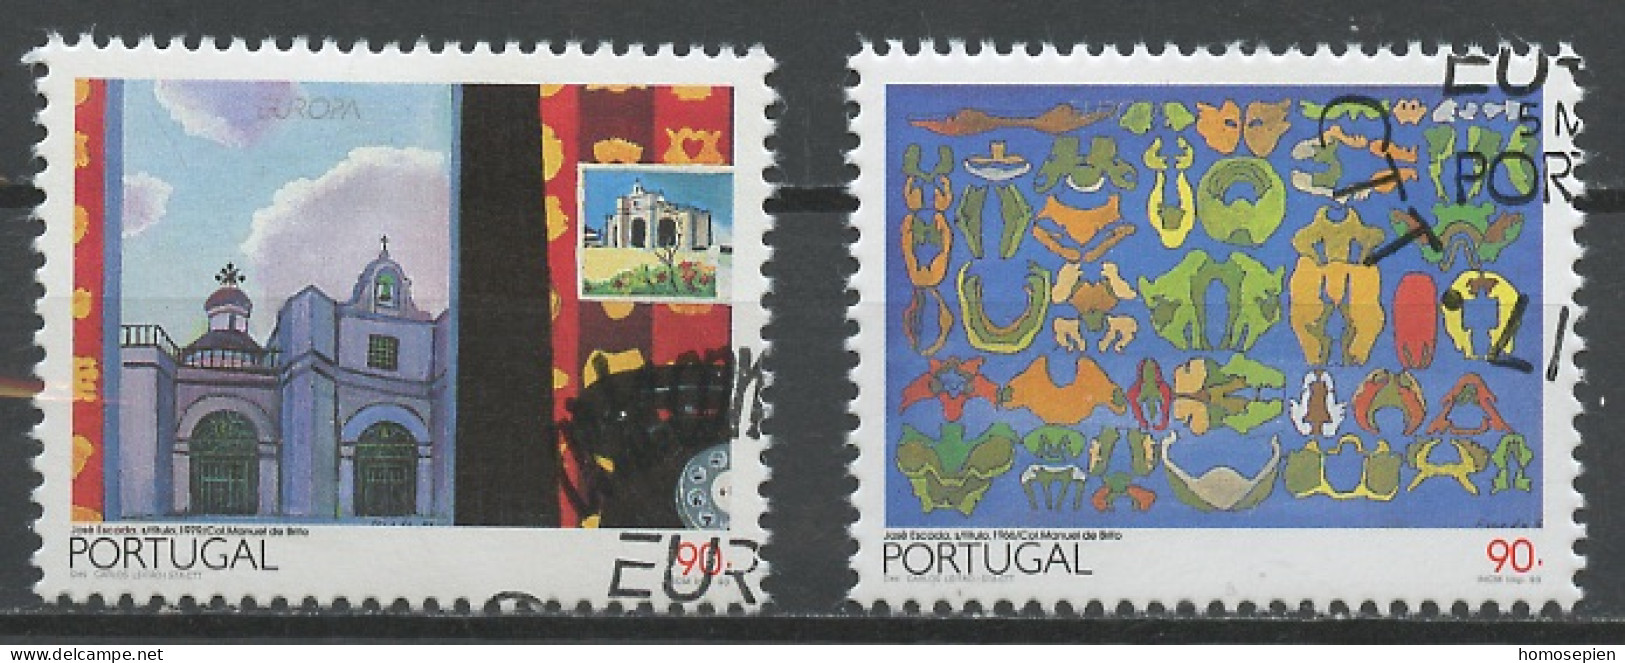 Portugal 1993 Y&T N°1937 à 1938 - Michel N°1959 à 1960 (o) - EUROPA - Used Stamps